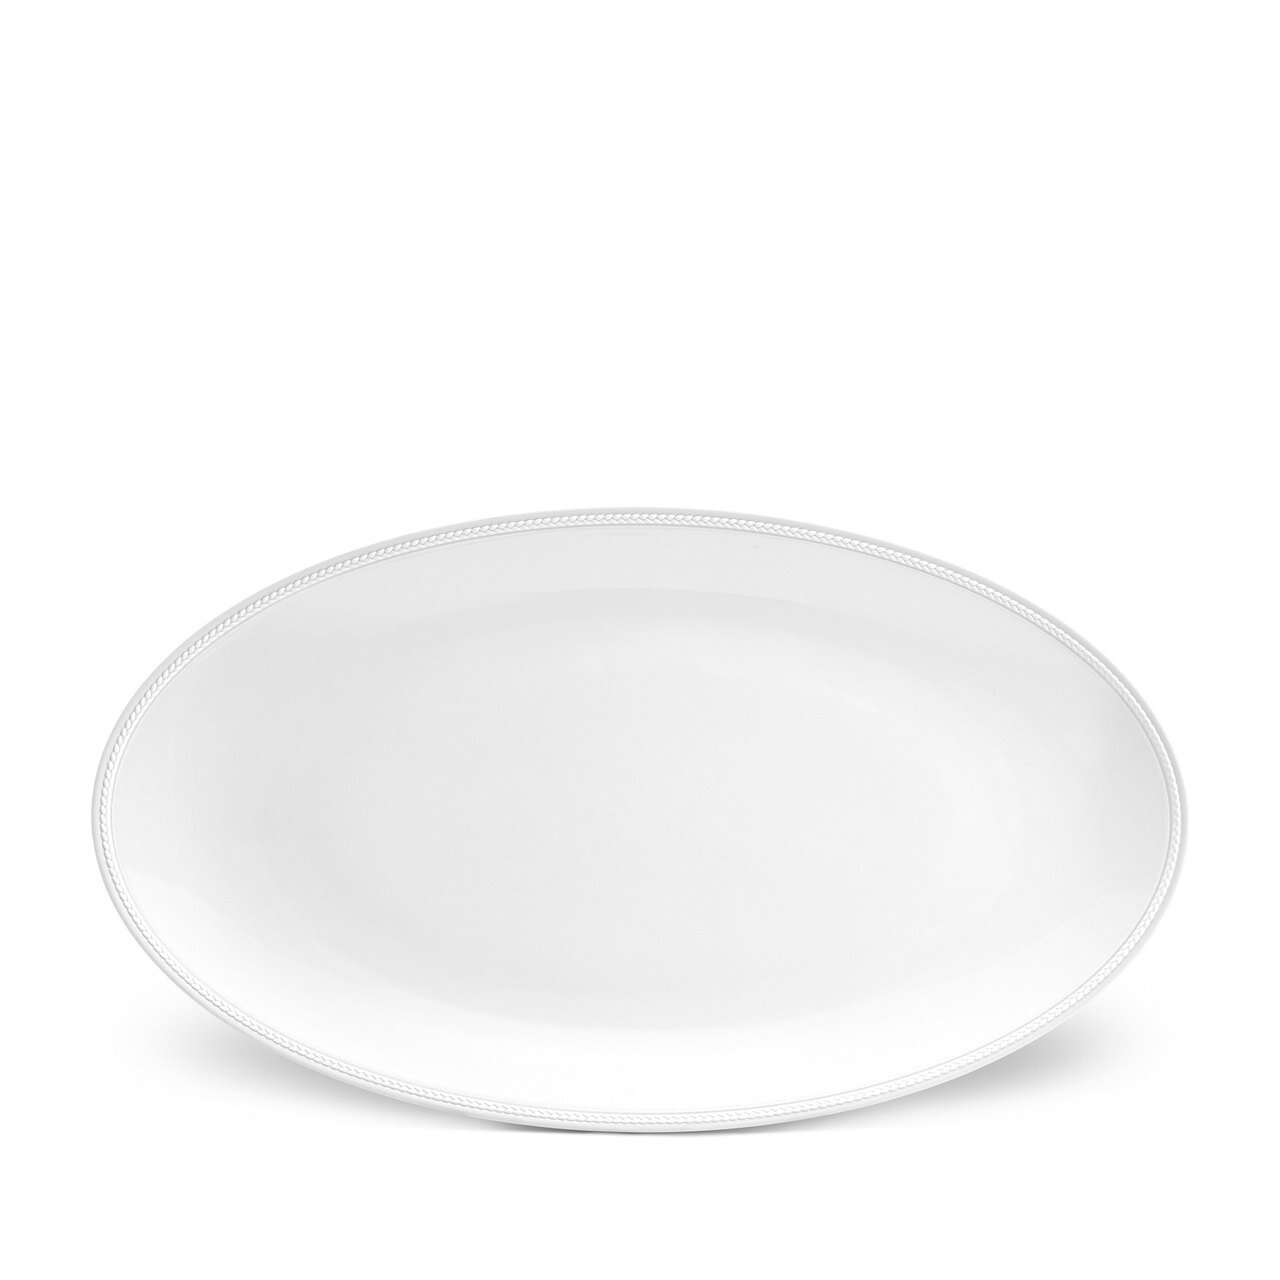 L'Objet Soie Tressee Large Oval Platter White